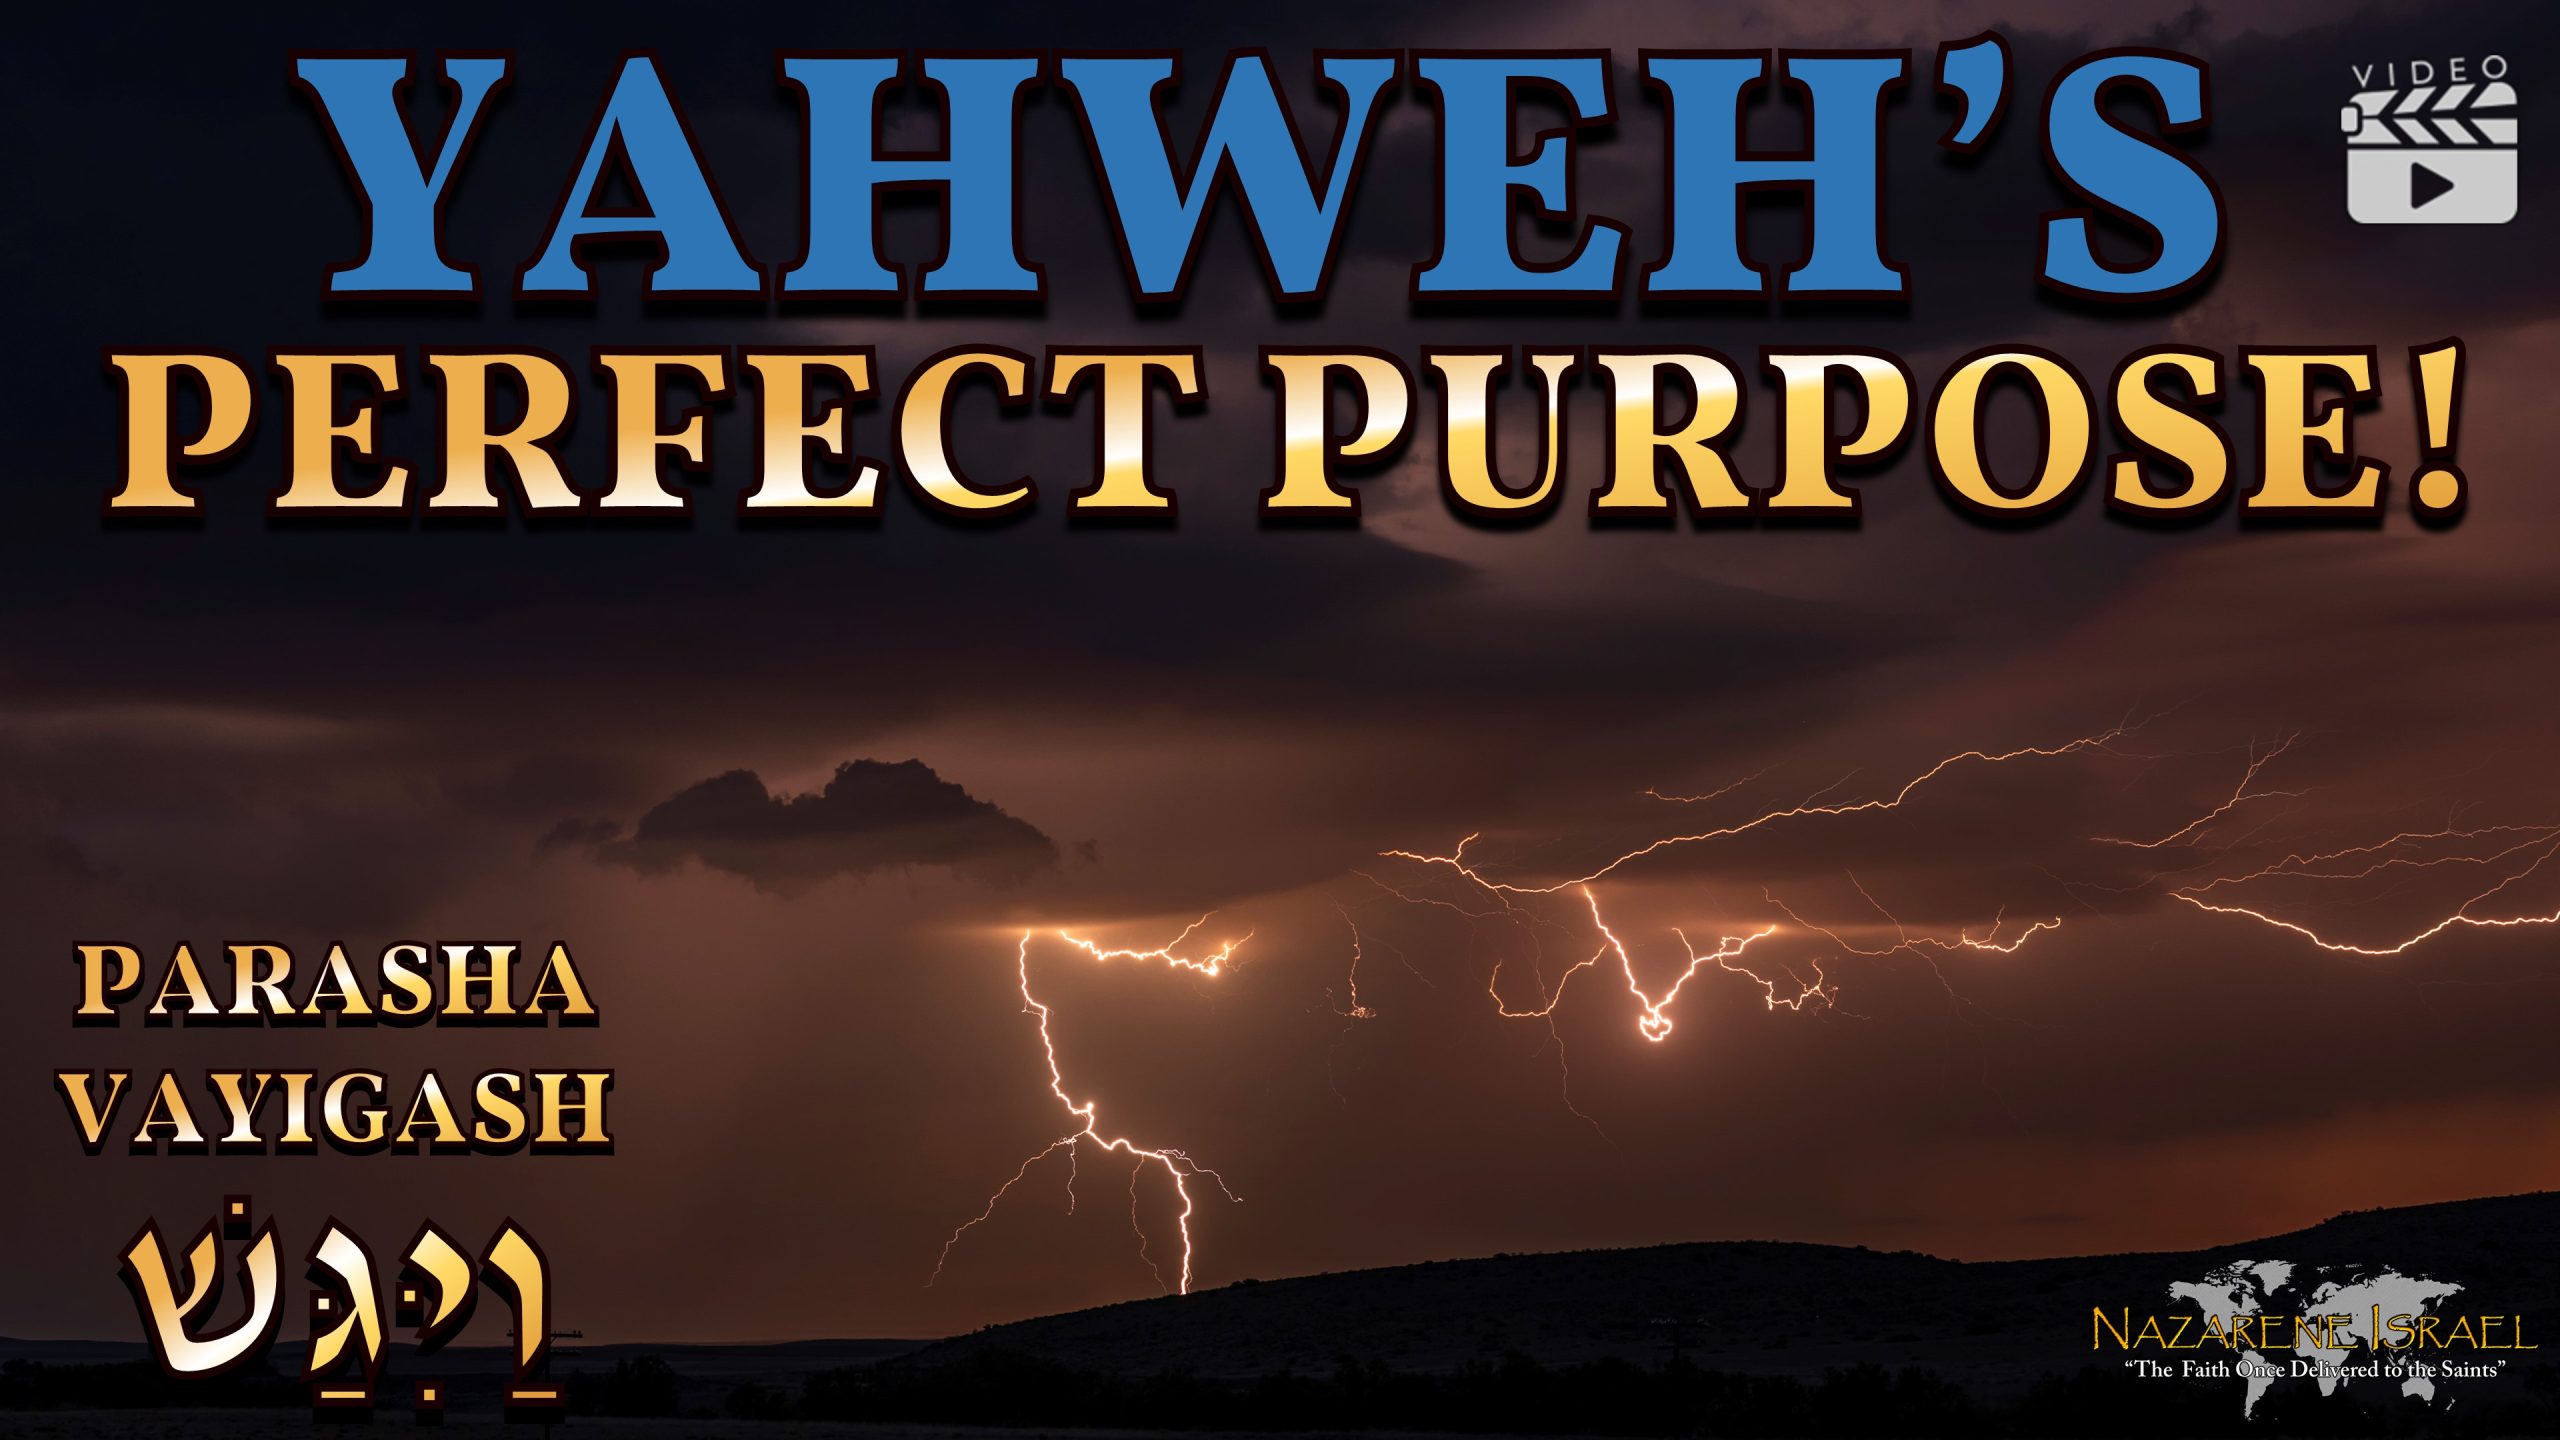 Parasha Vayigash 2023 – “Yahweh’s Perfect Purpose!”